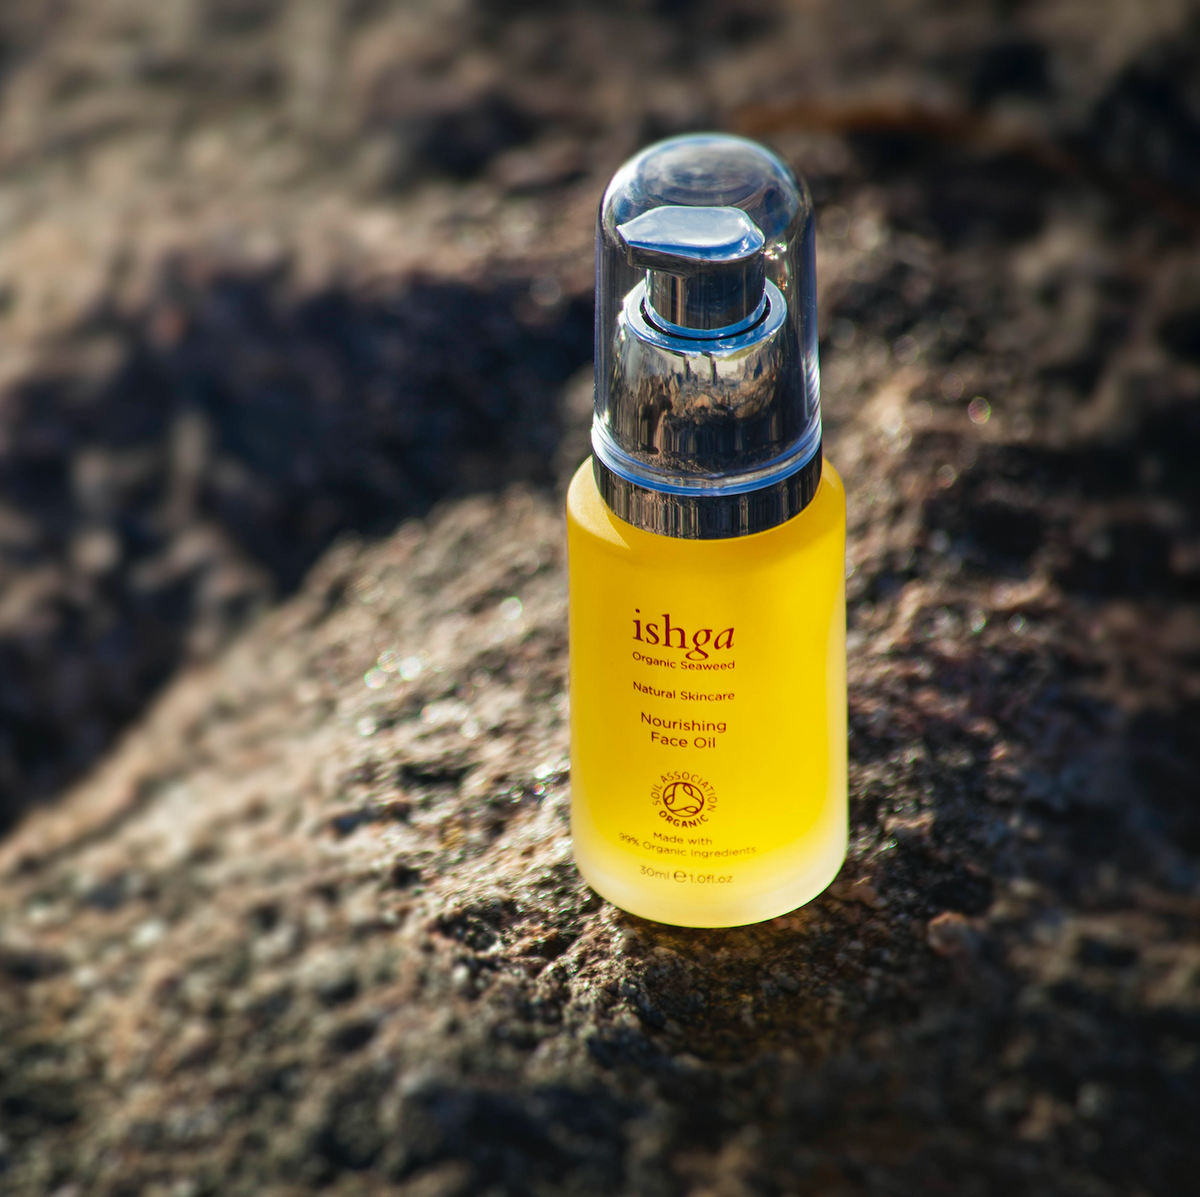 Glass bottle of ishga Nourishing Organic Face Oil on a rock